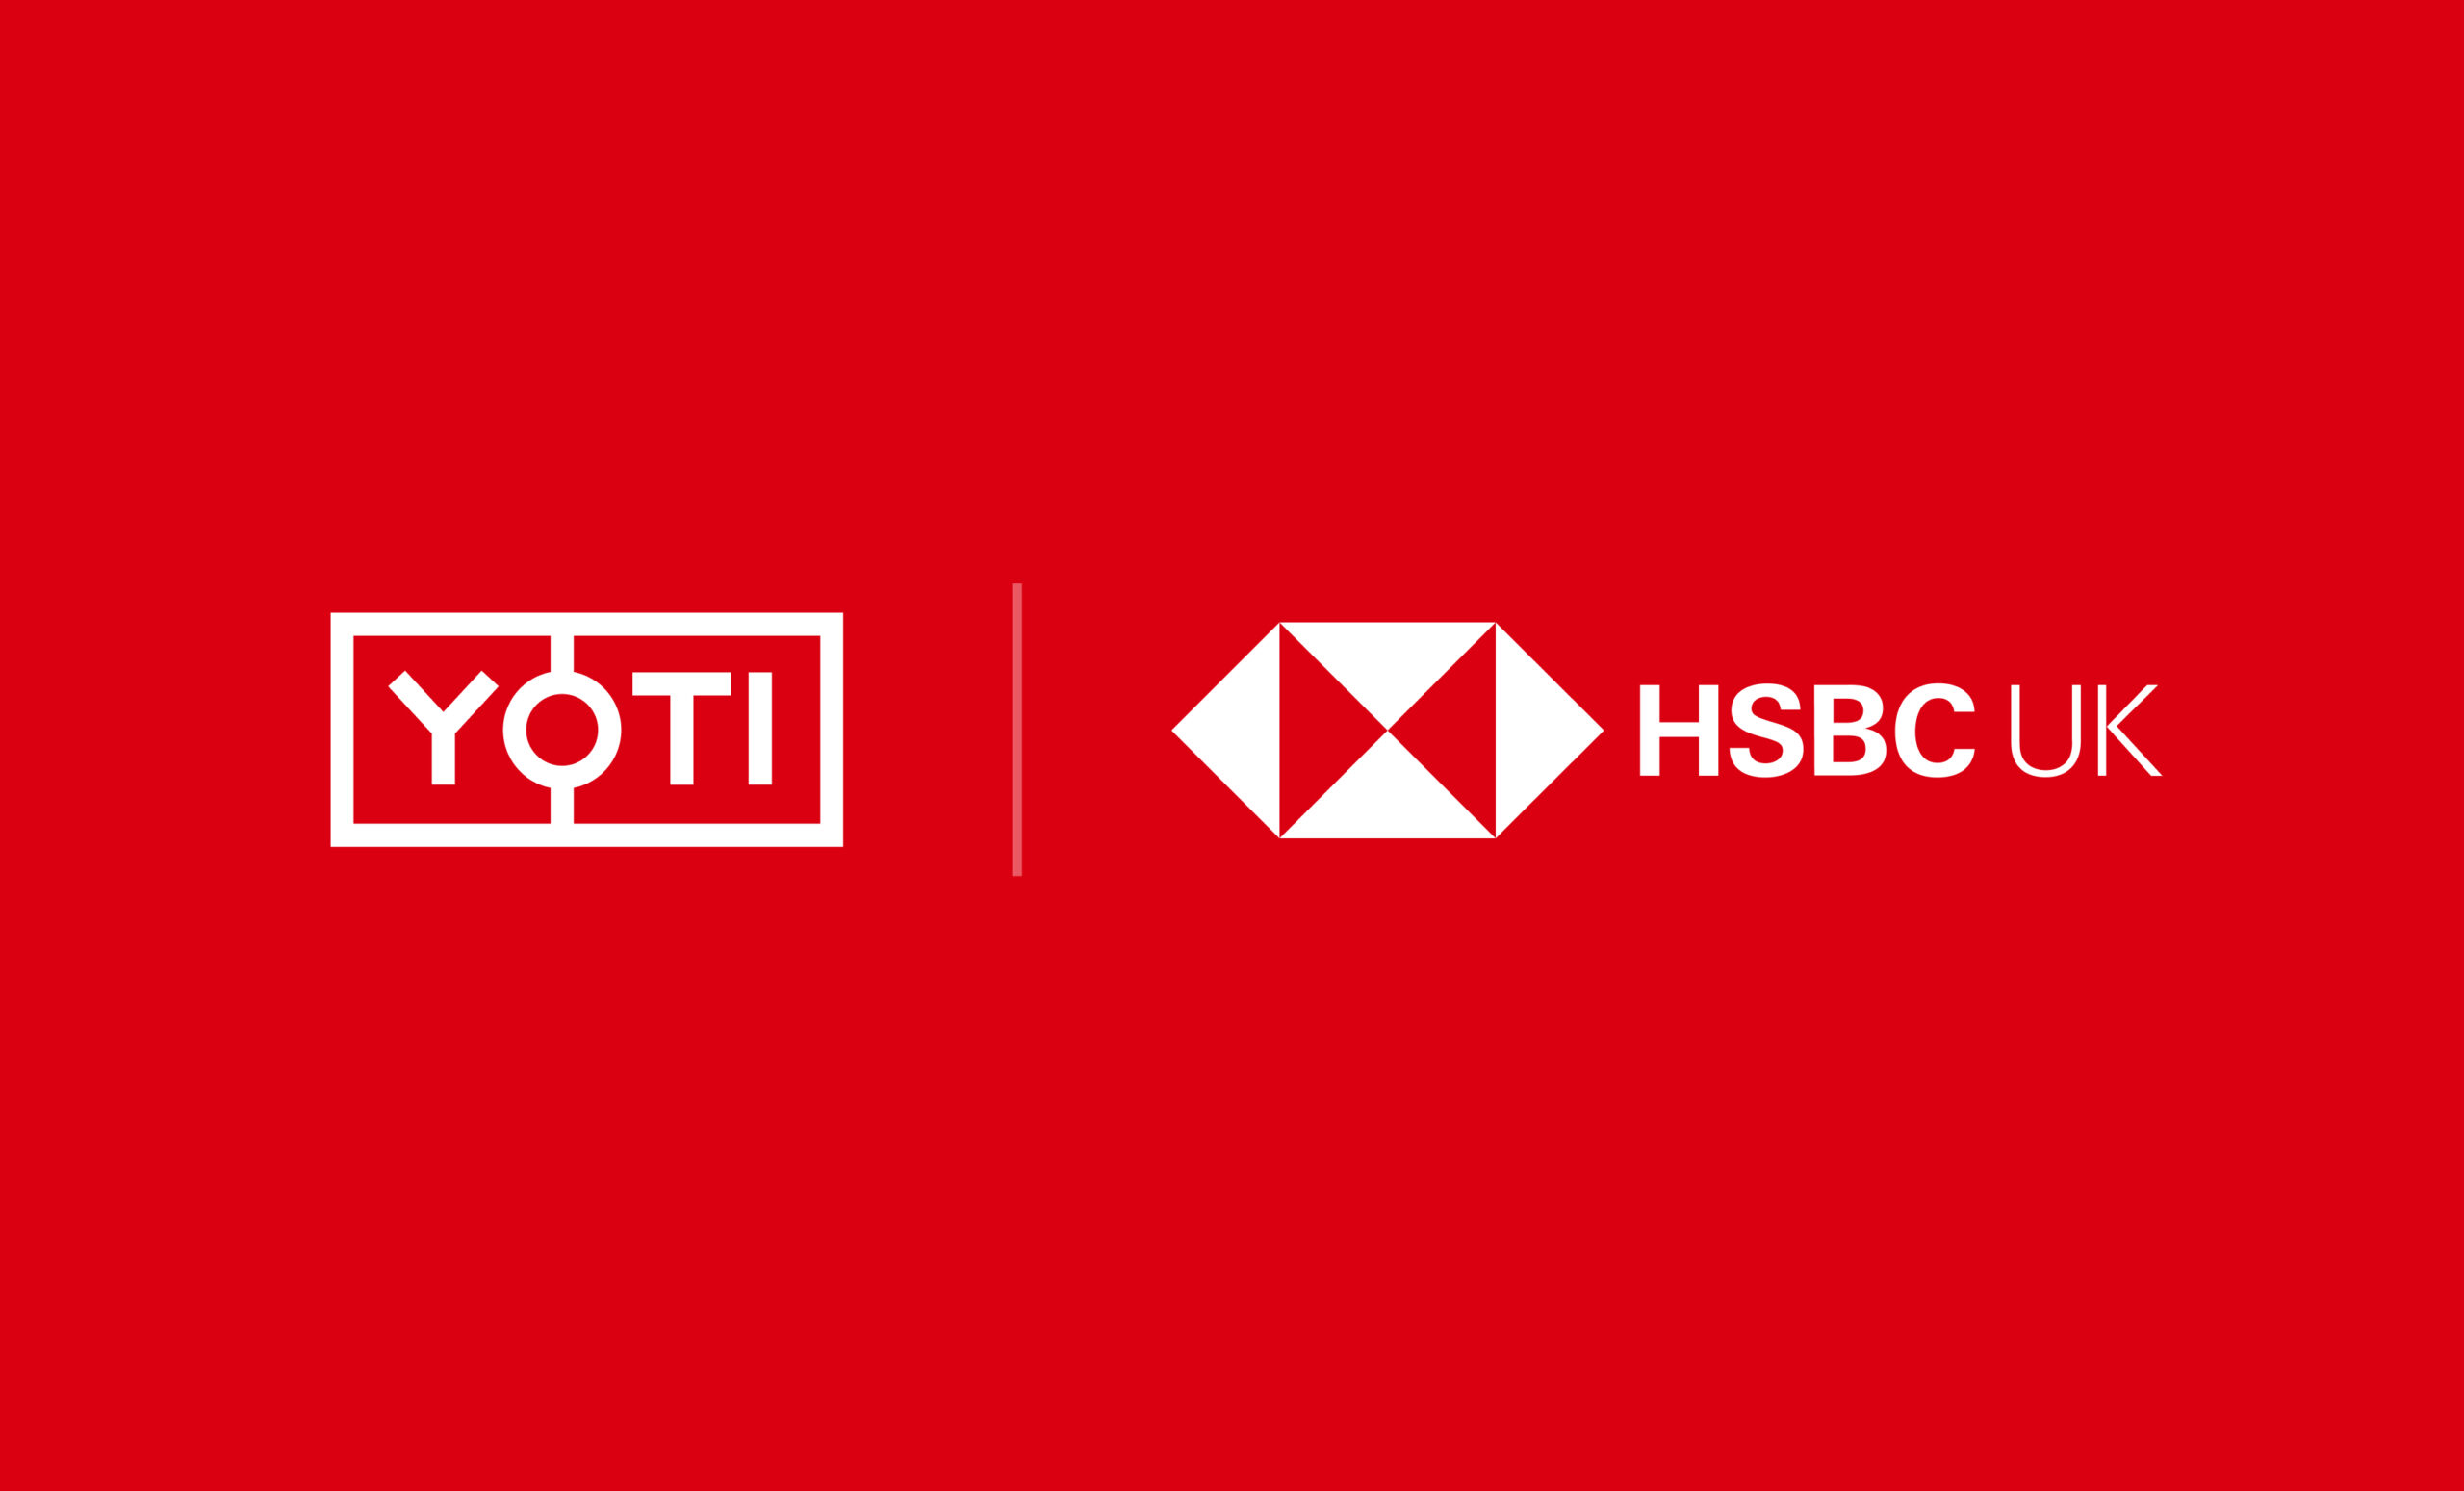 Yoti and HSBC UK logos